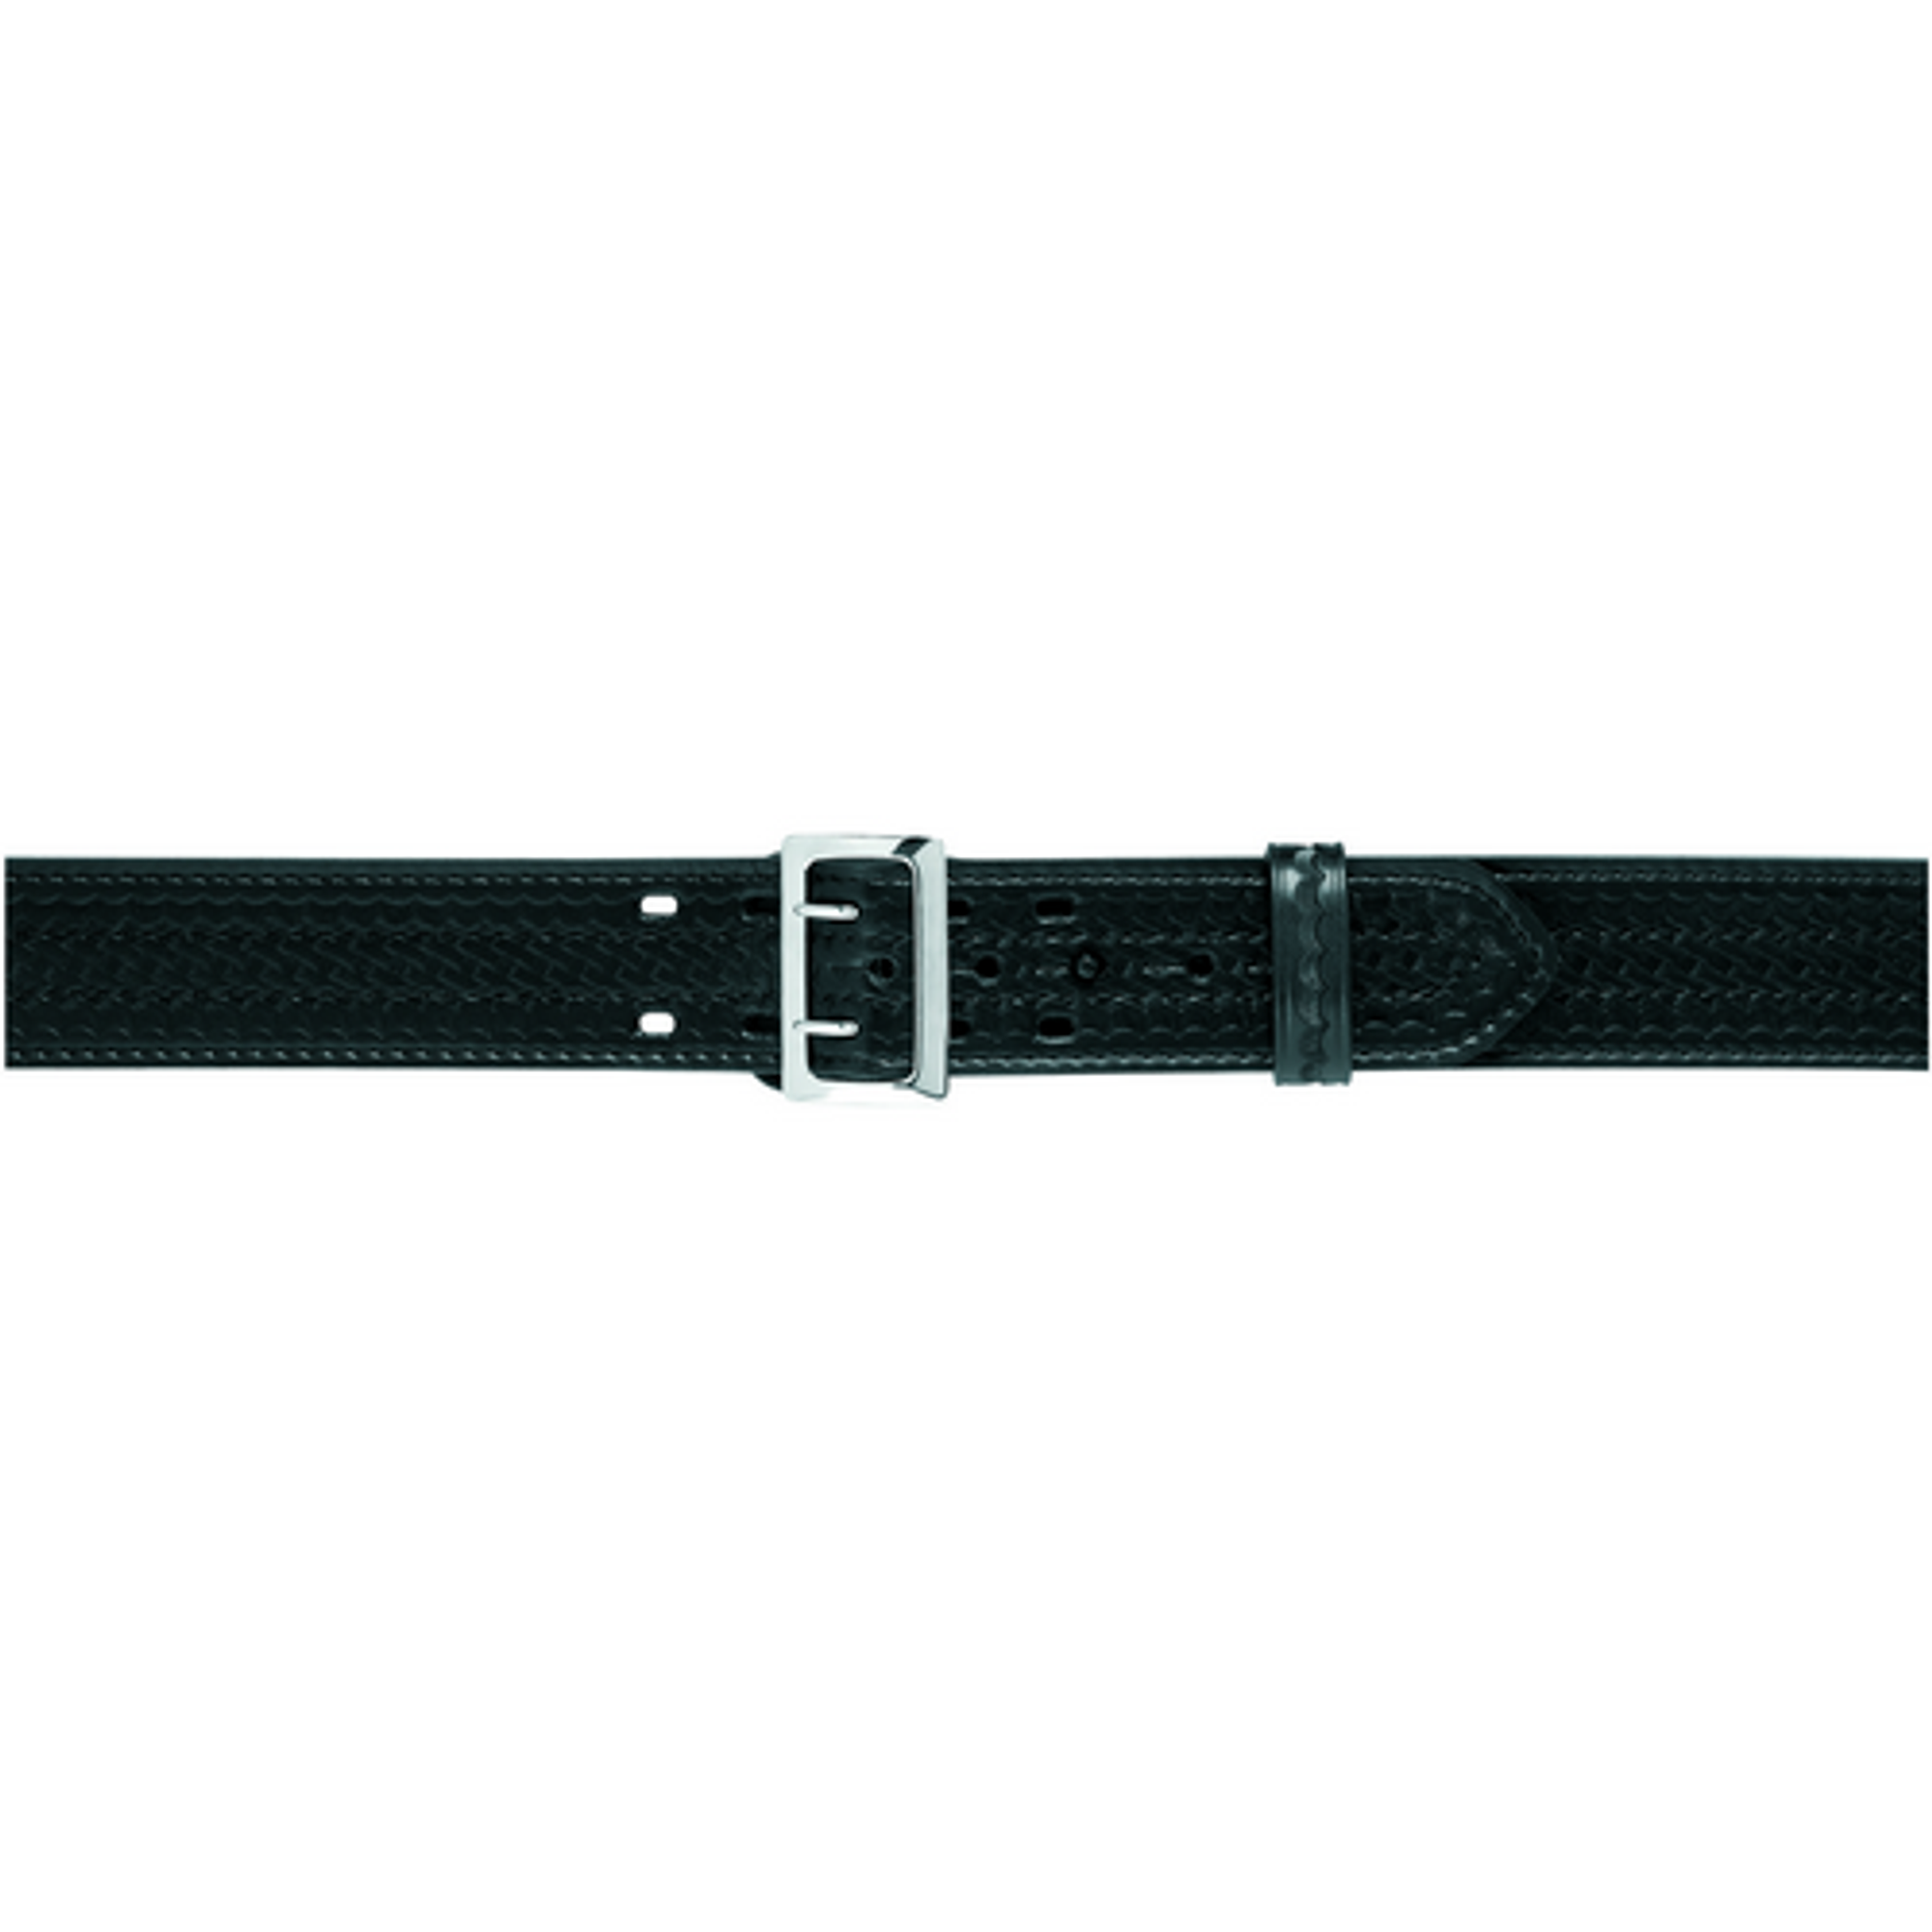 875 - Stitched Edge Sam Browne Duty Belt 2.25 (58mm) - KR875-40-6